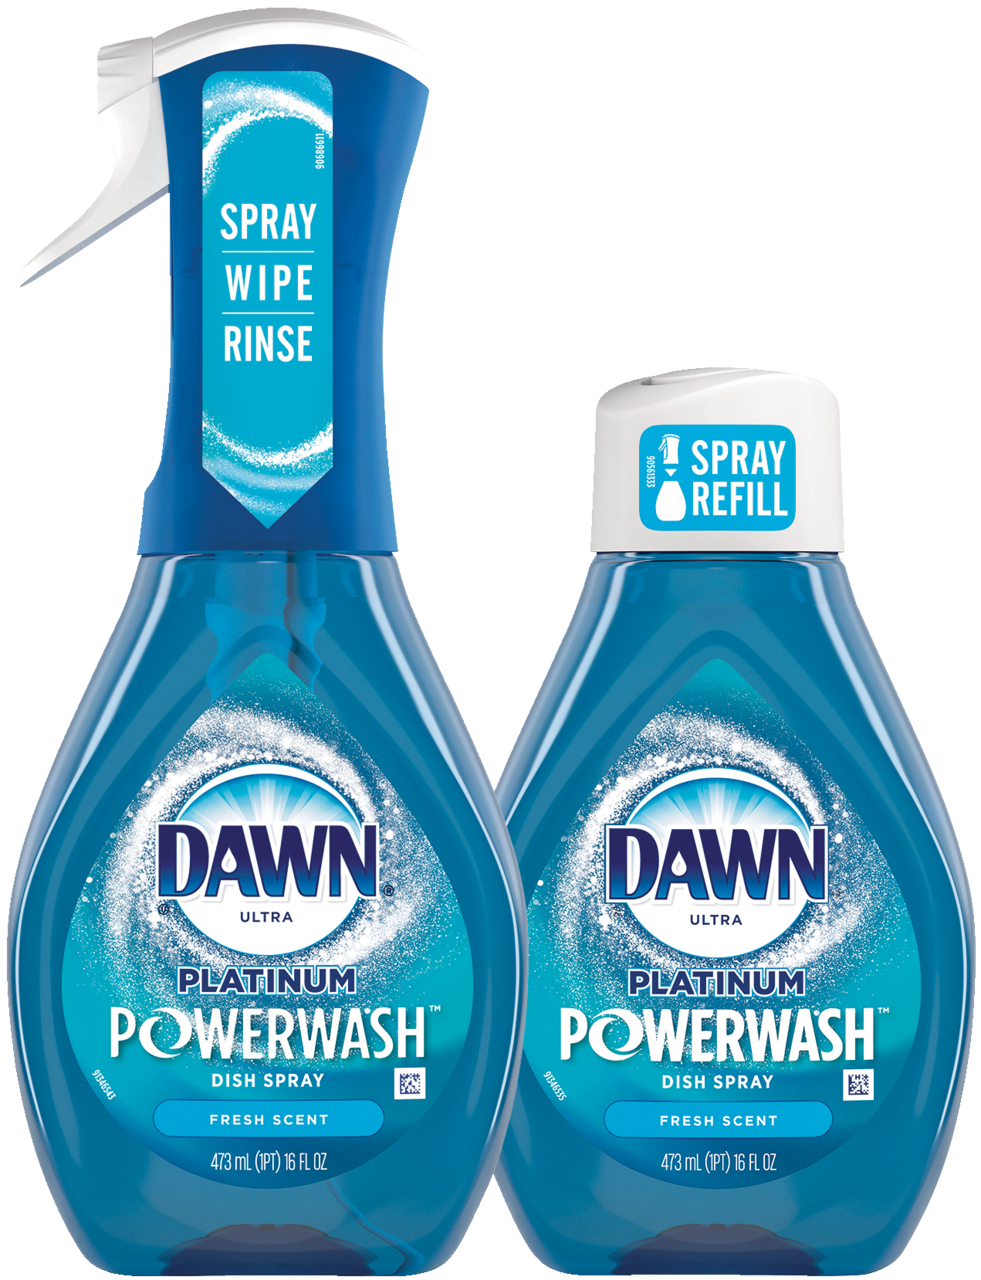 Dawn Platinum Powerwash Dish Spray Starter Kit Plus Refill Dish